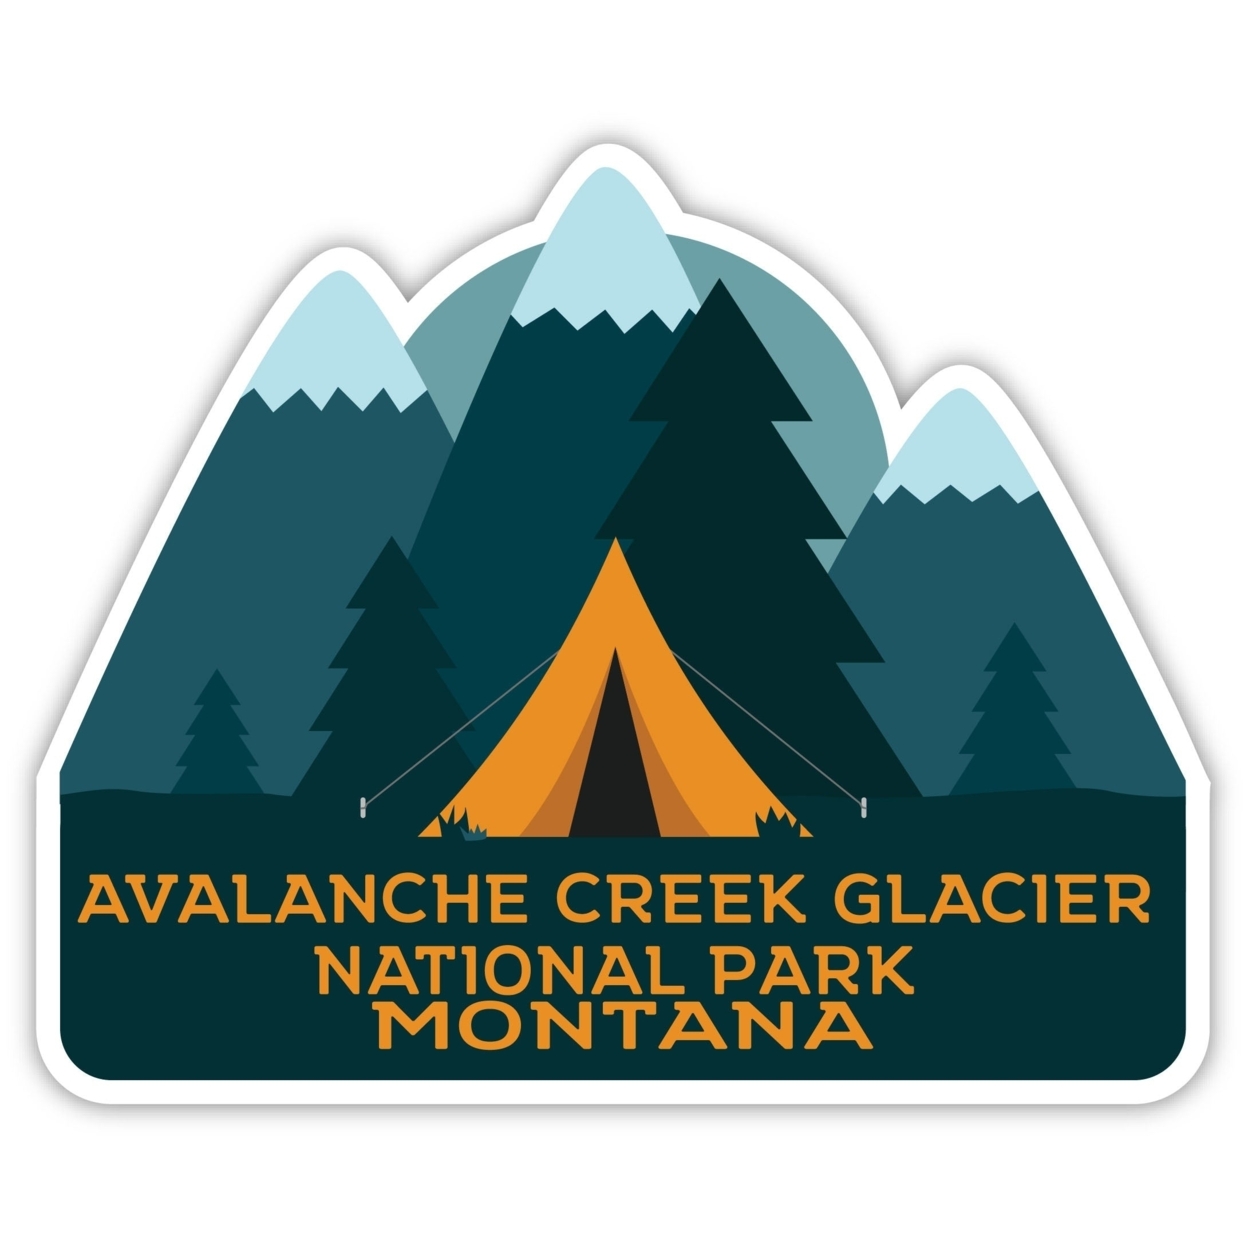 Avalanche Creek Glacier National Park Montana Souvenir Decorative Stickers (Choose Theme And Size) - 4-Pack, 8-Inch, Tent